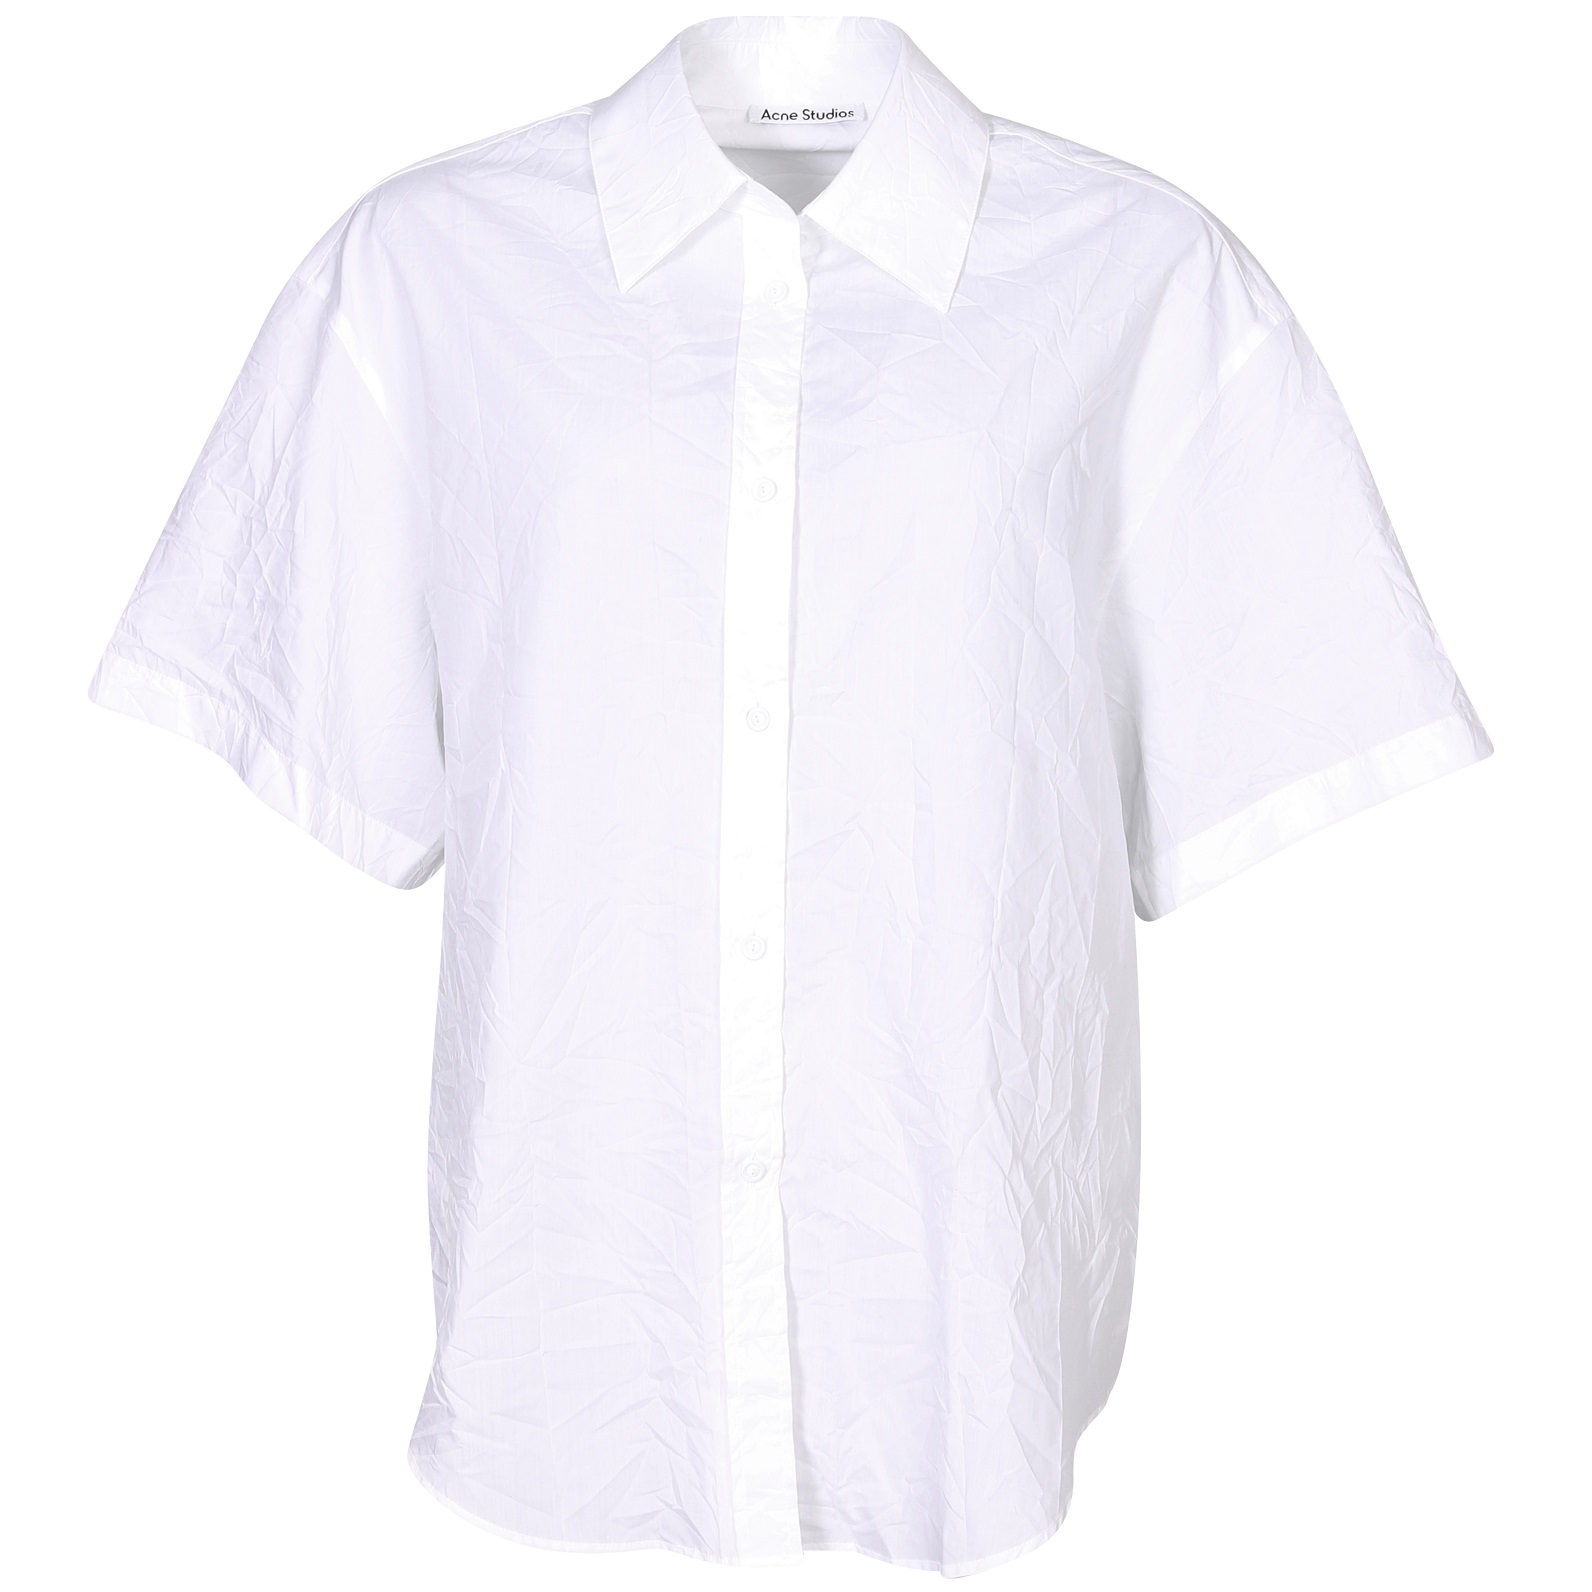 ACNE STUDIOS White Shirt Back Stitched